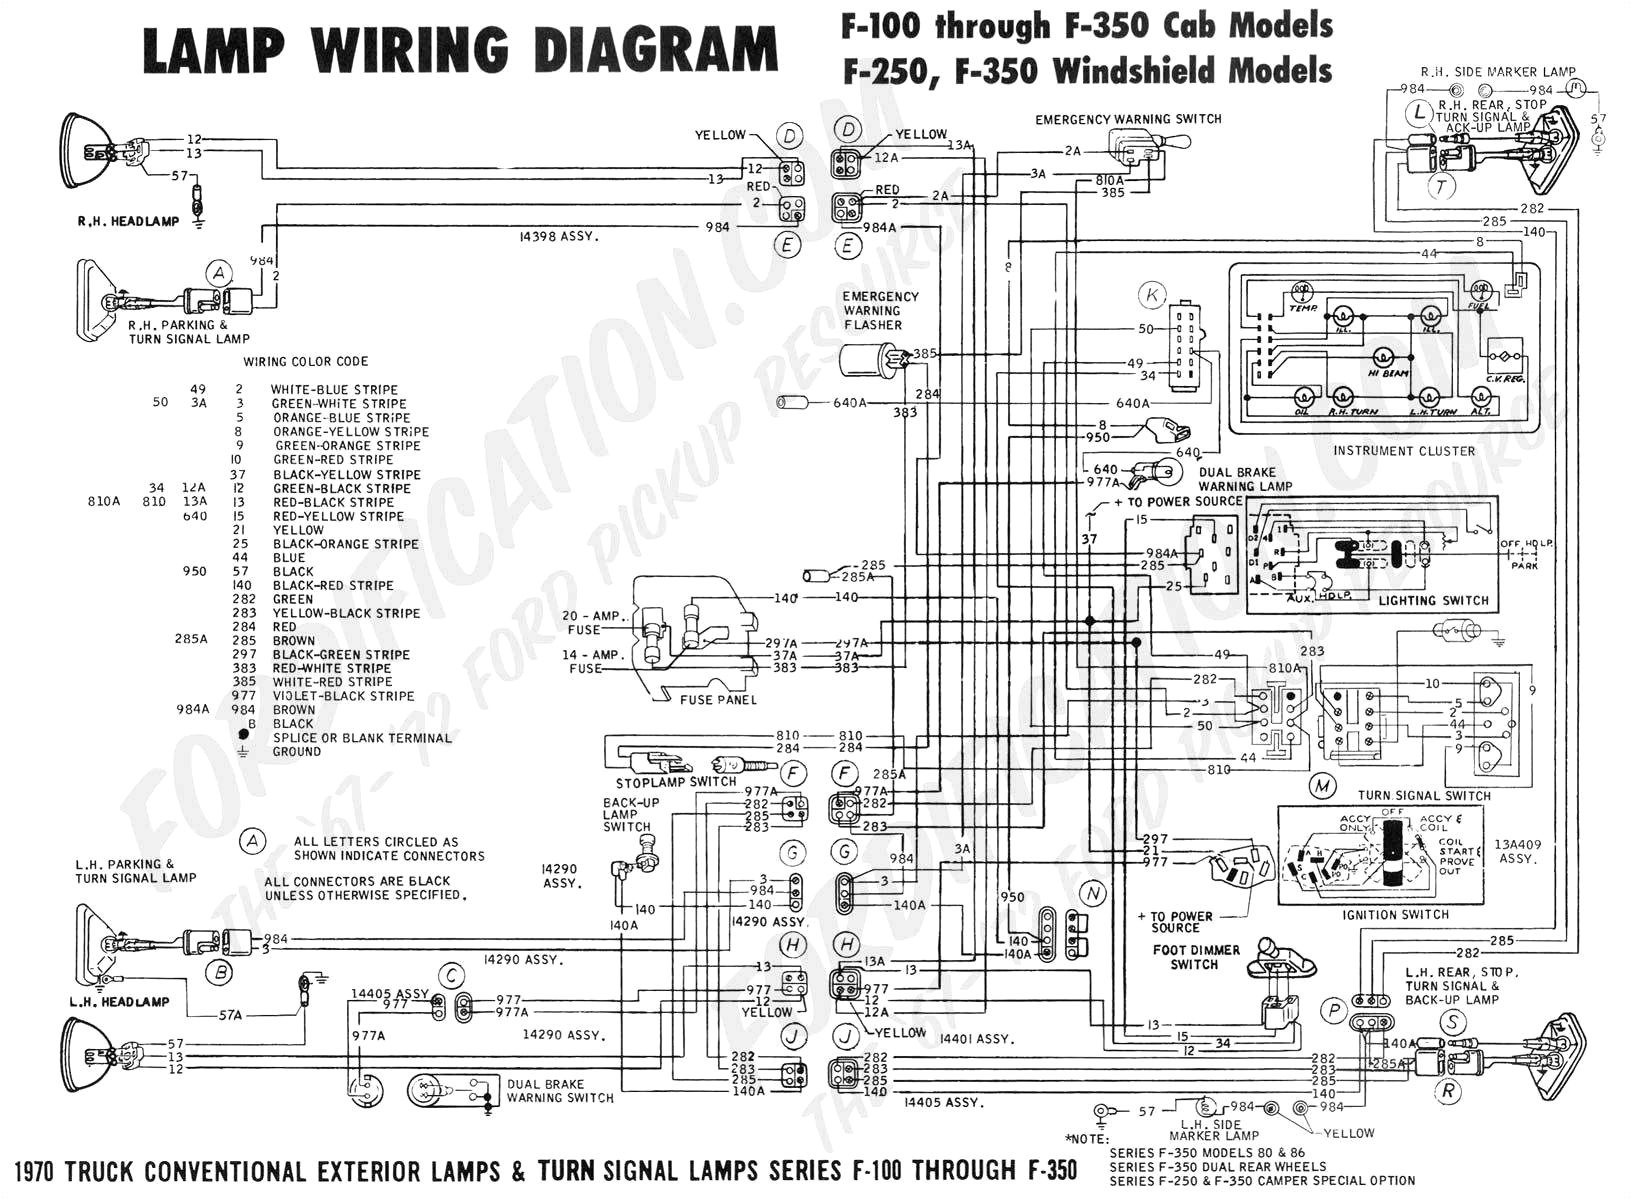 2006 ford fusion engine diagram diagram besides 2006 ford f 250 wiring diagram 2006 ford f 250 of 2006 ford fusion engine diagram jpg